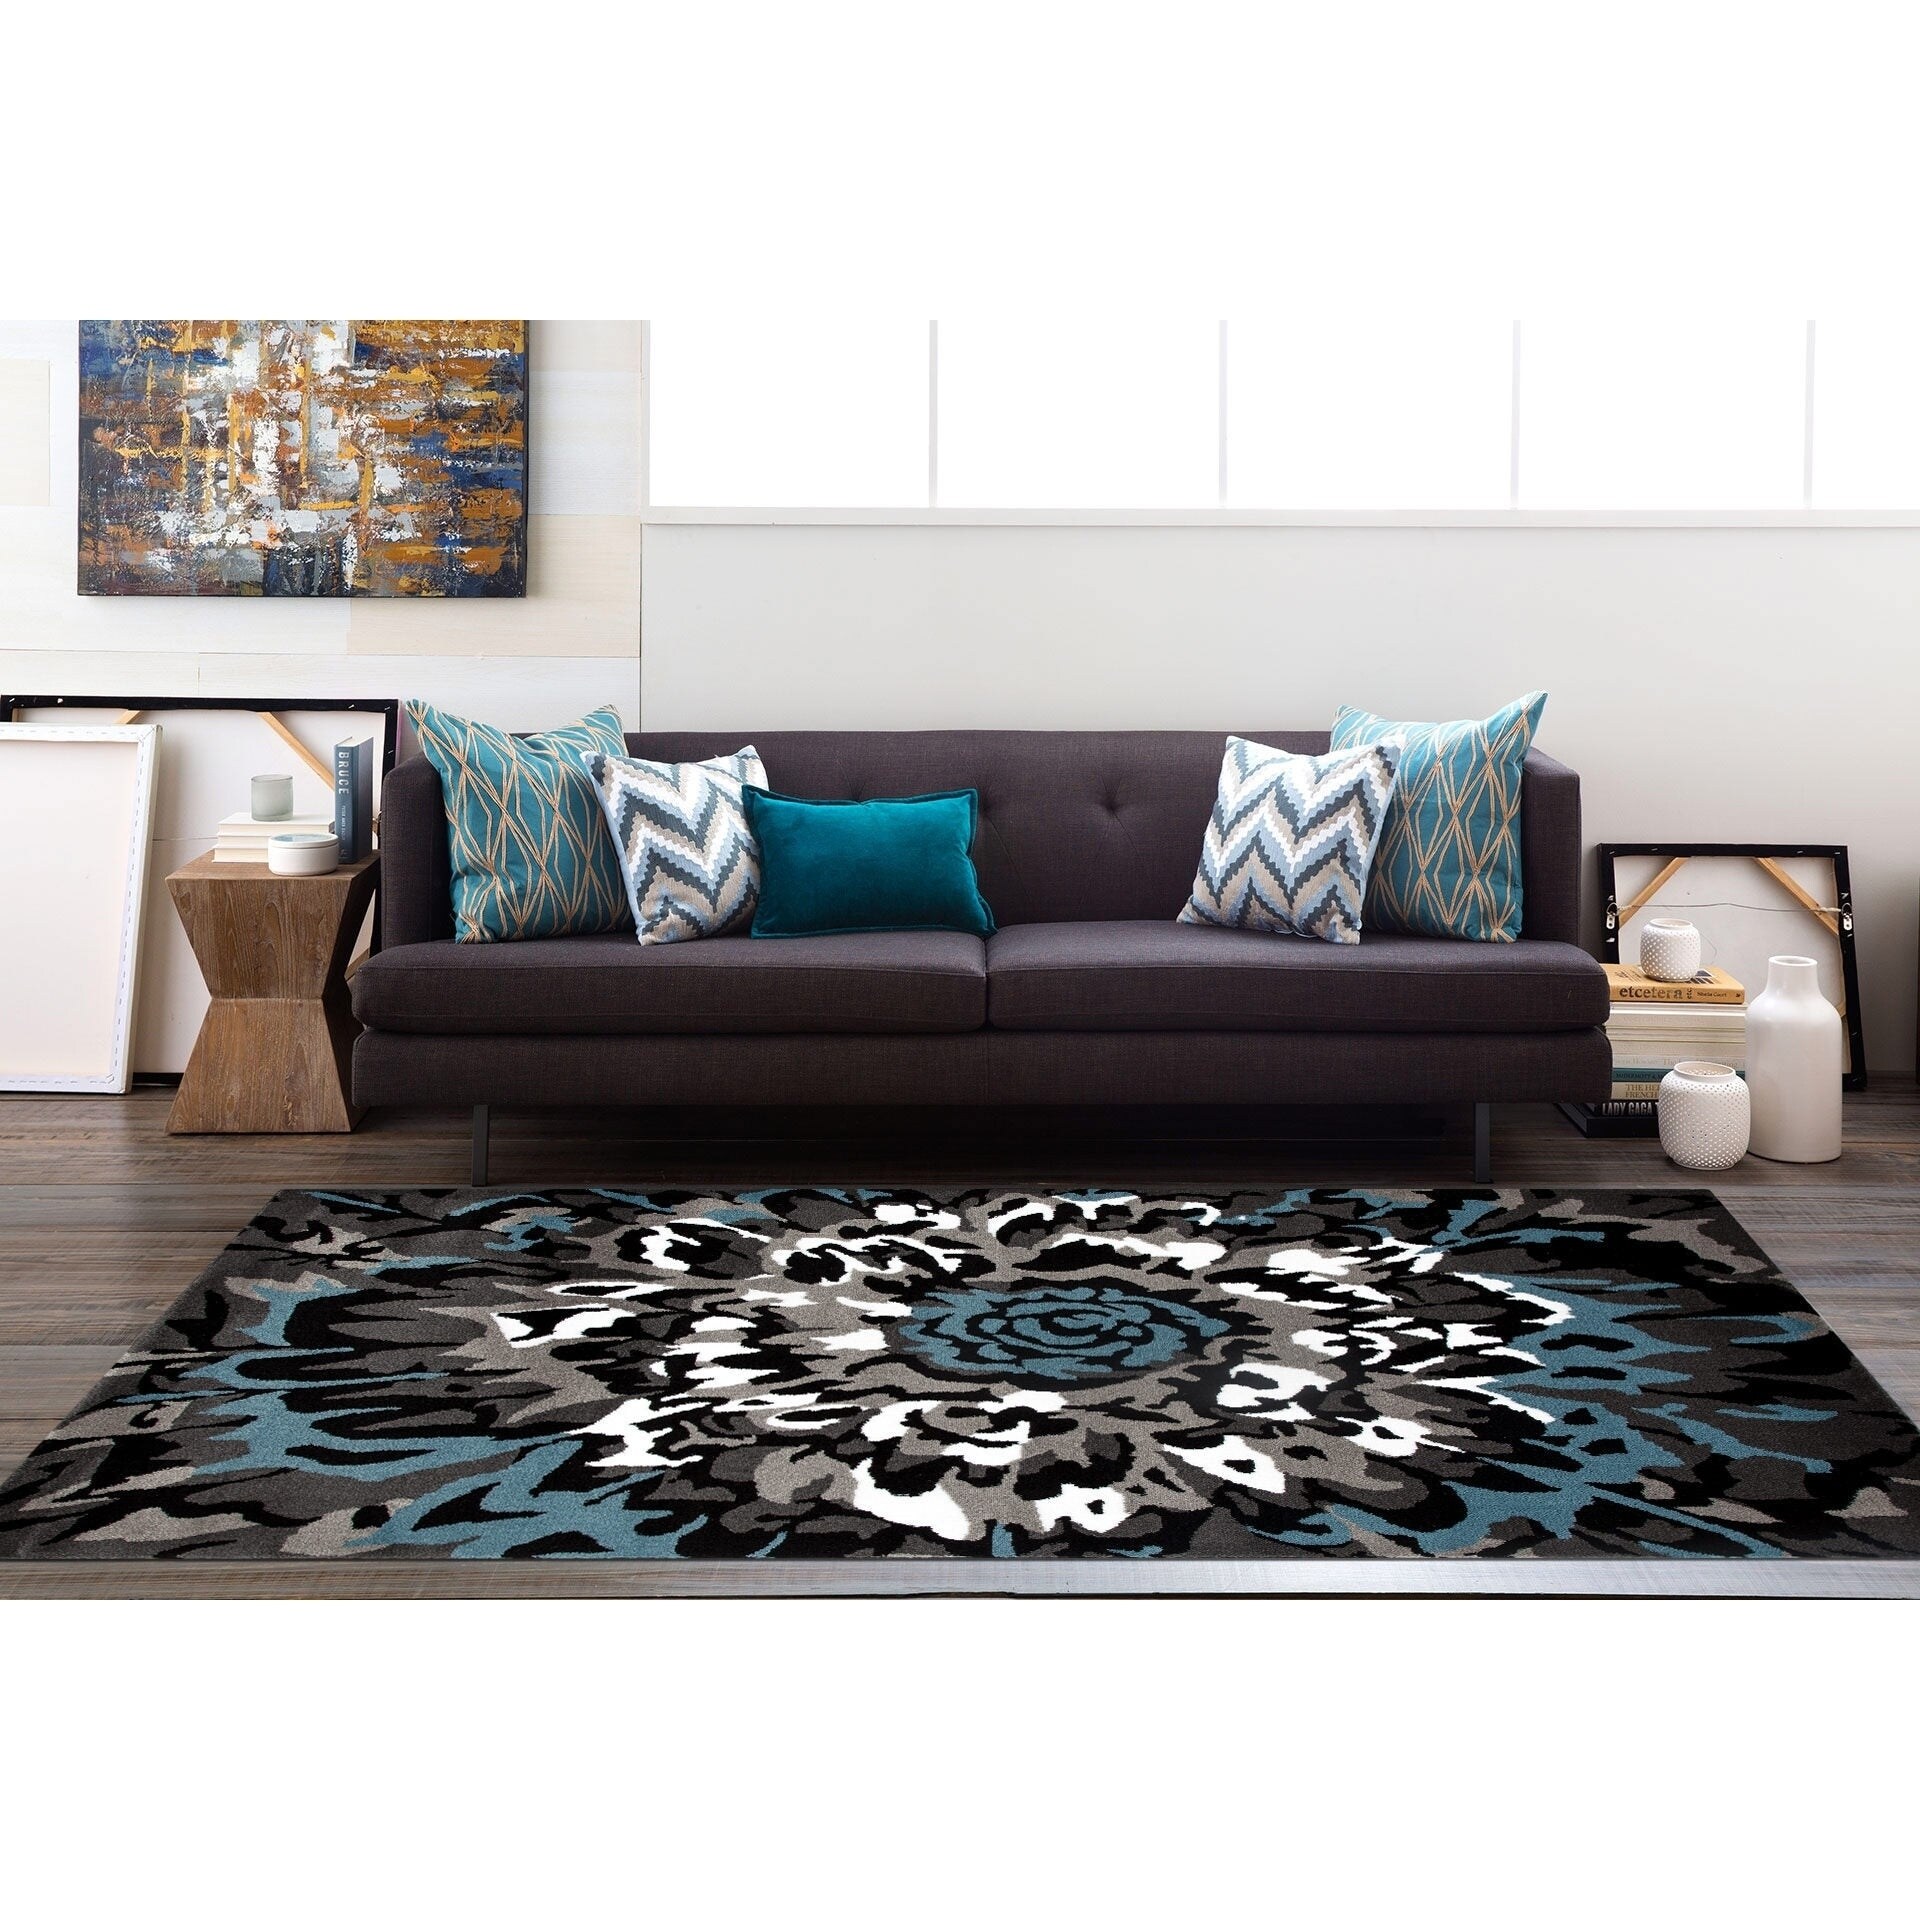 Extra Large Area carpet A2Z Rug|Santorini Blue Medallion Design With Floral Border|Sitting Room Modern Vintage Classic Area Rug|Soft Short Medium Pile|240x330cm 7'10x10'10ft